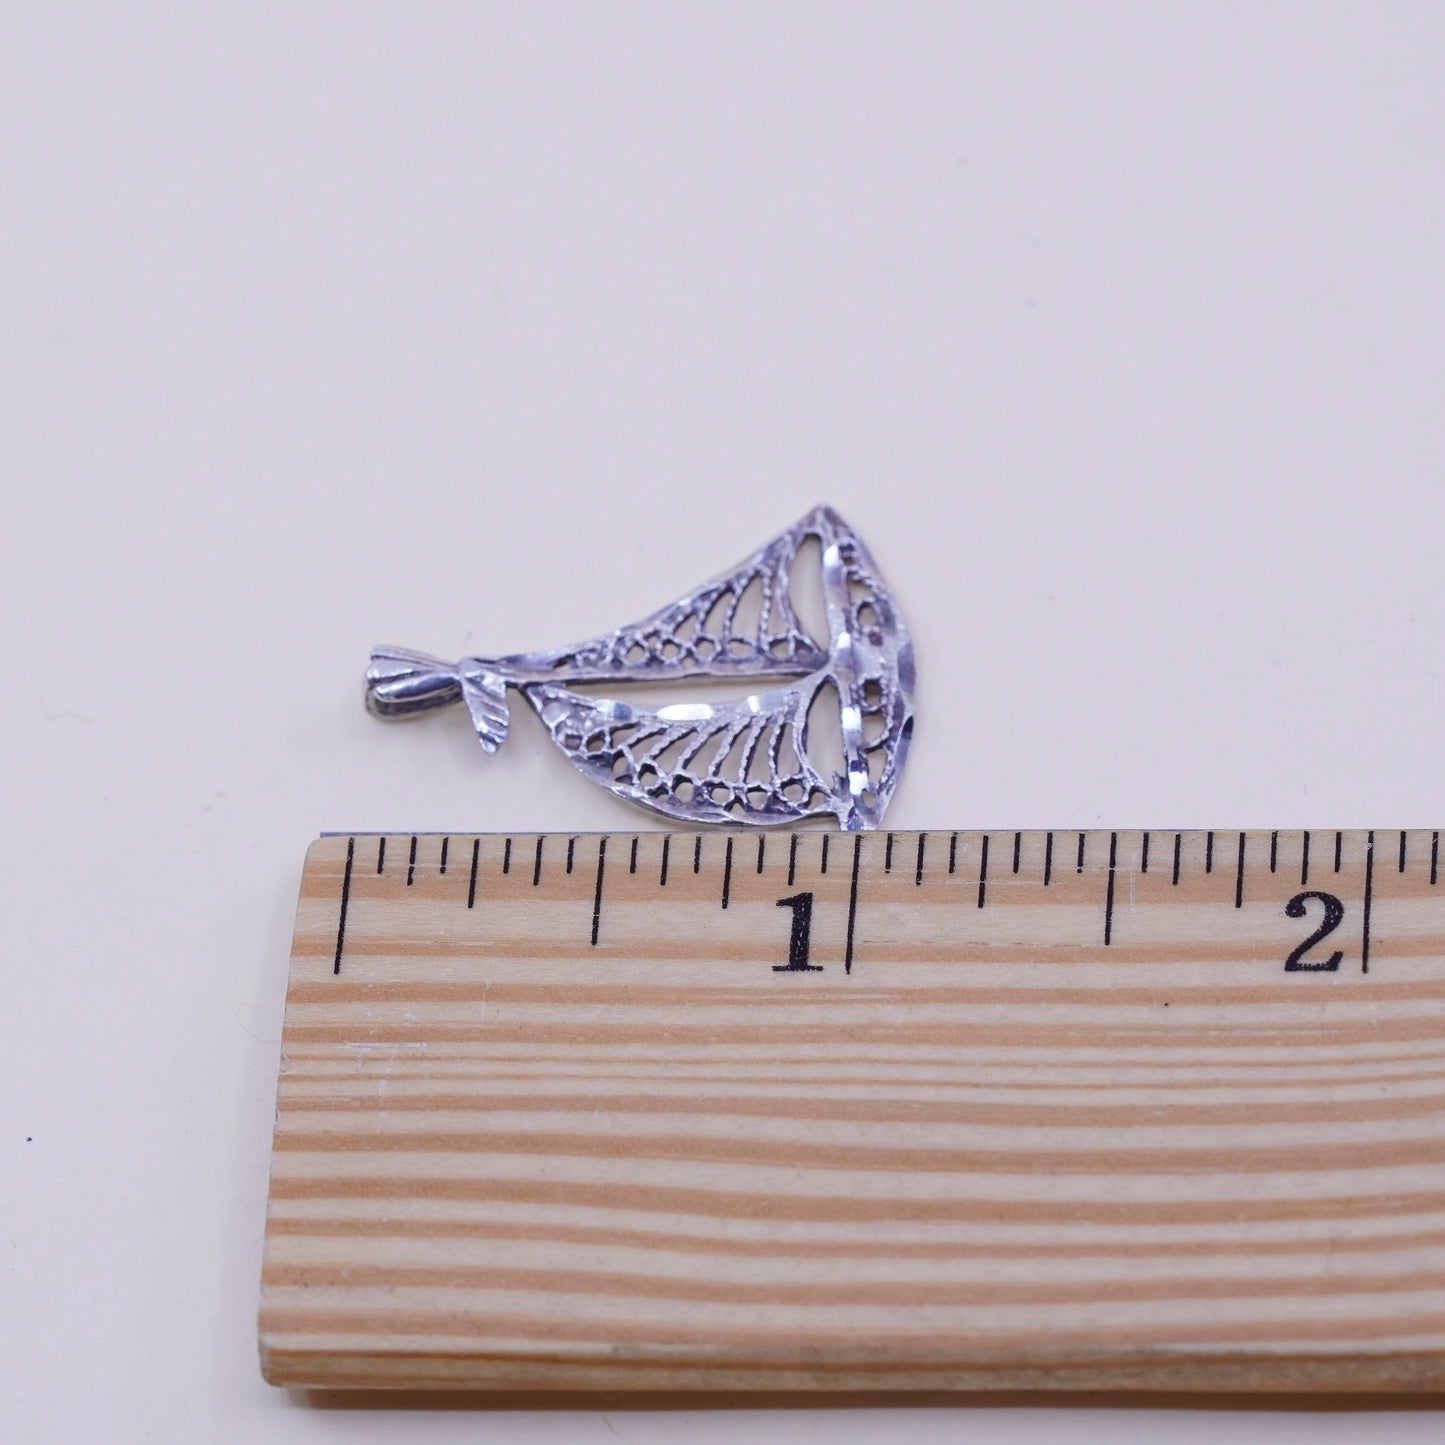 vtg sterling silver handmade filigree pendant, 925 soufeel sailing boat charm